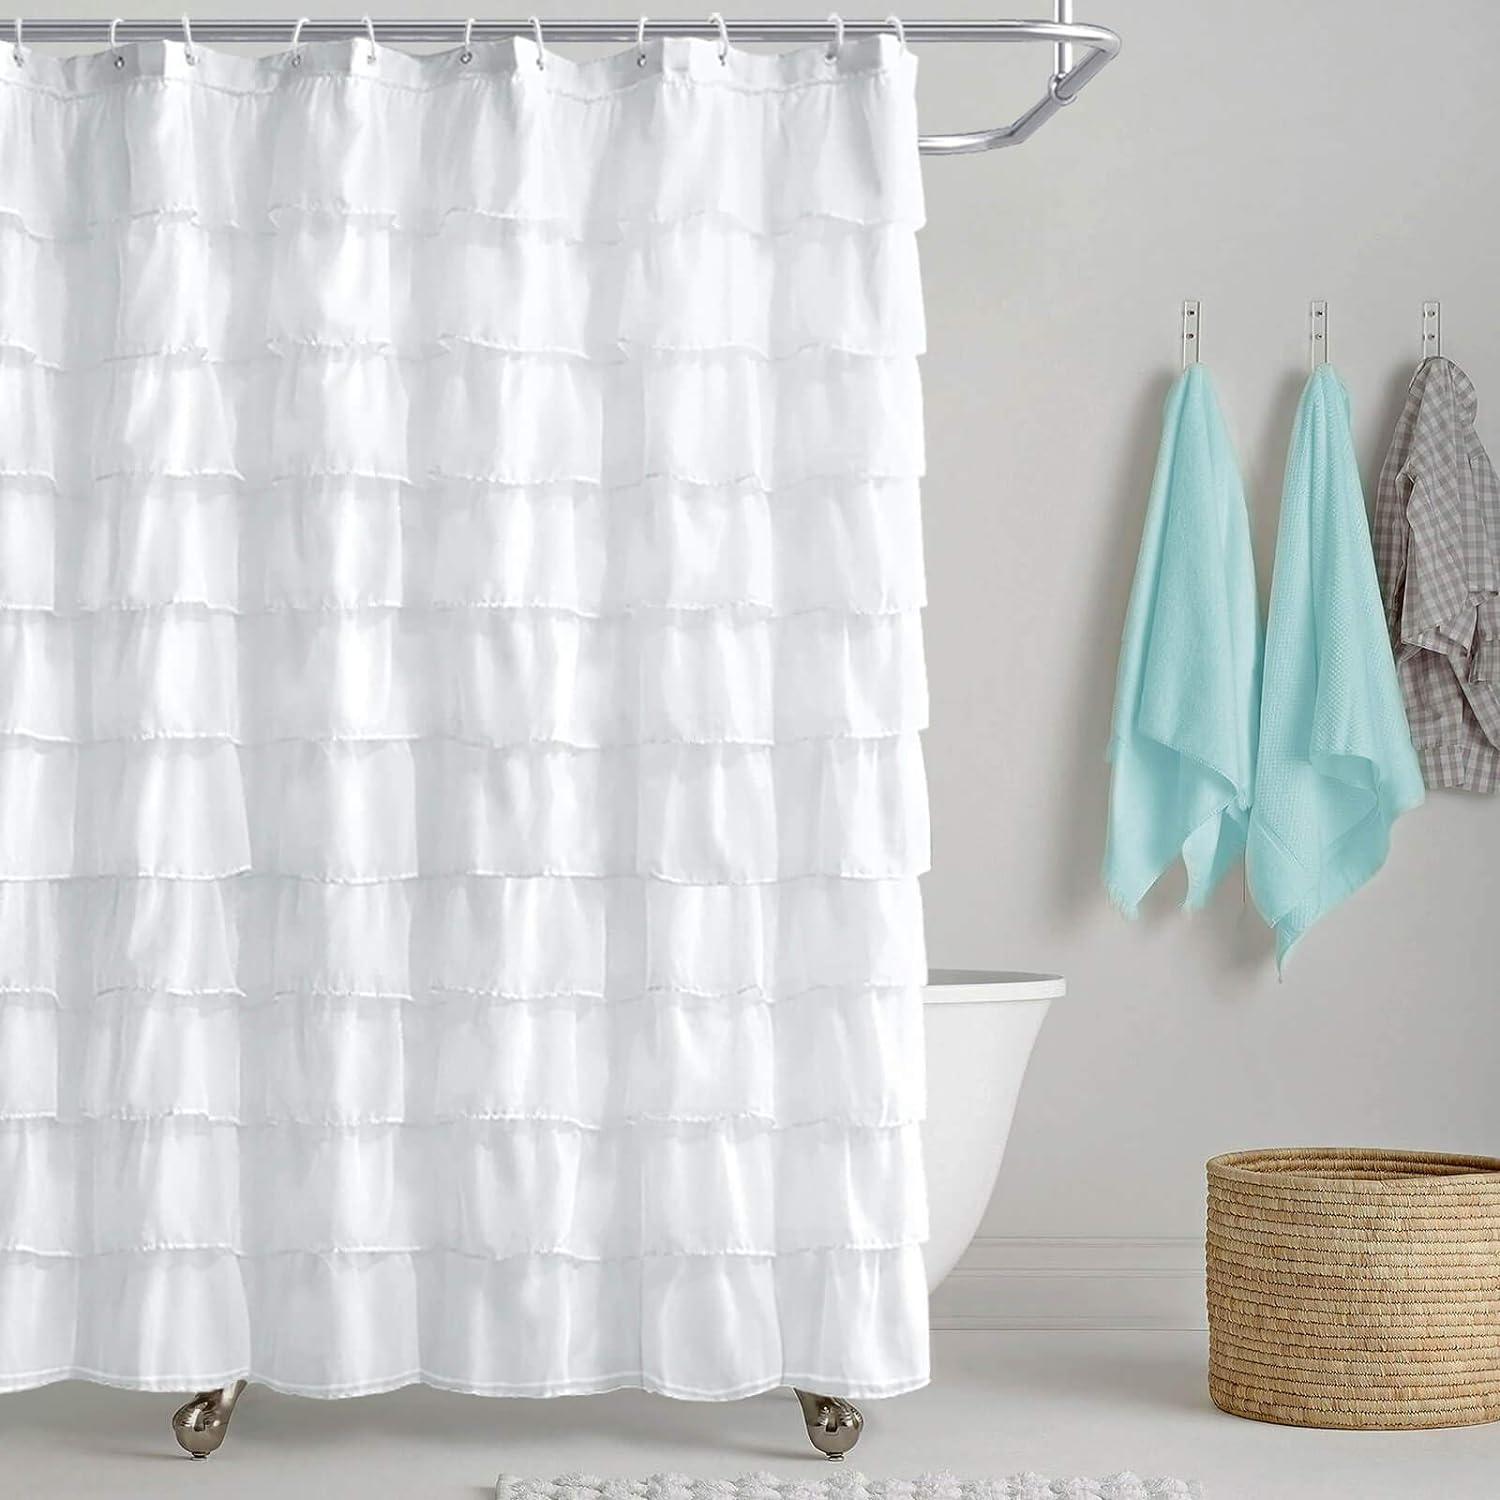 Cortina de ducha de tela blanca, cortina de ducha de felpilla con text -  VIRTUAL MUEBLES